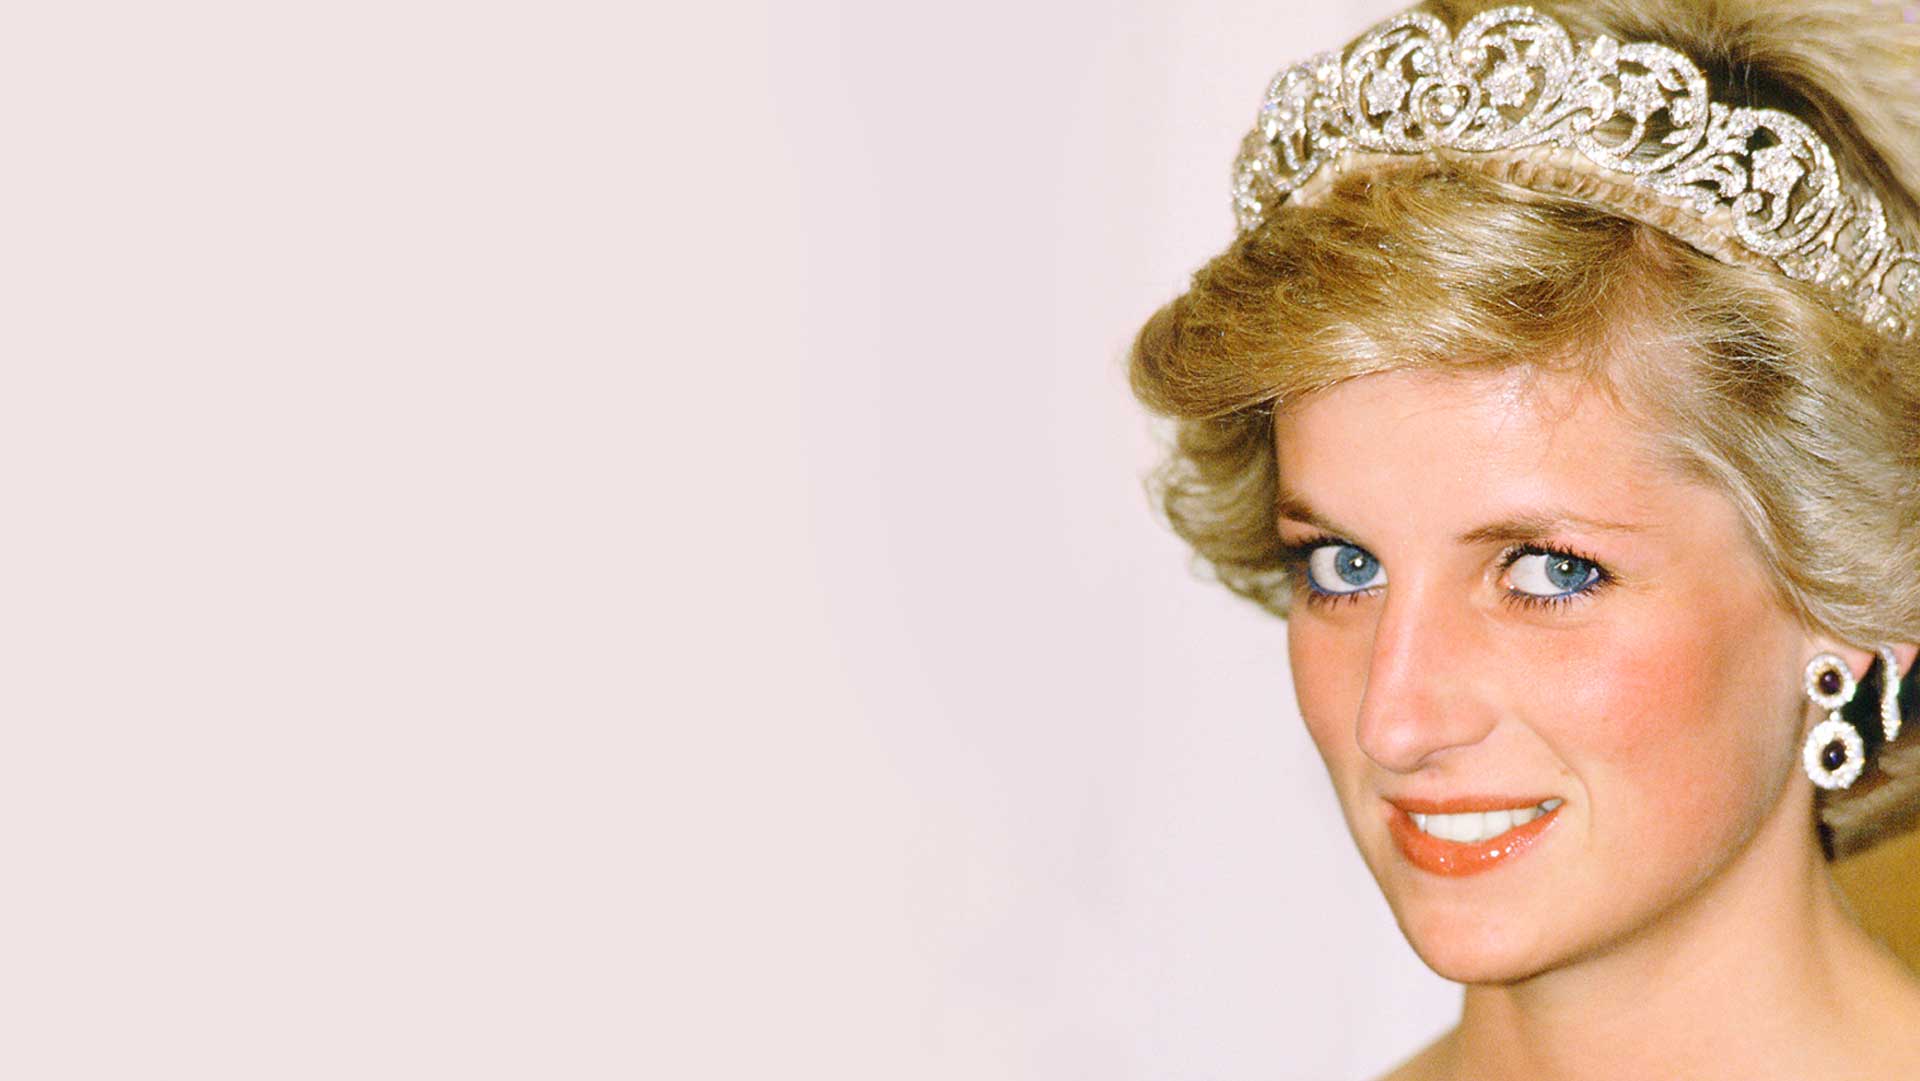 Kiwi stars recall day Princess Diana died